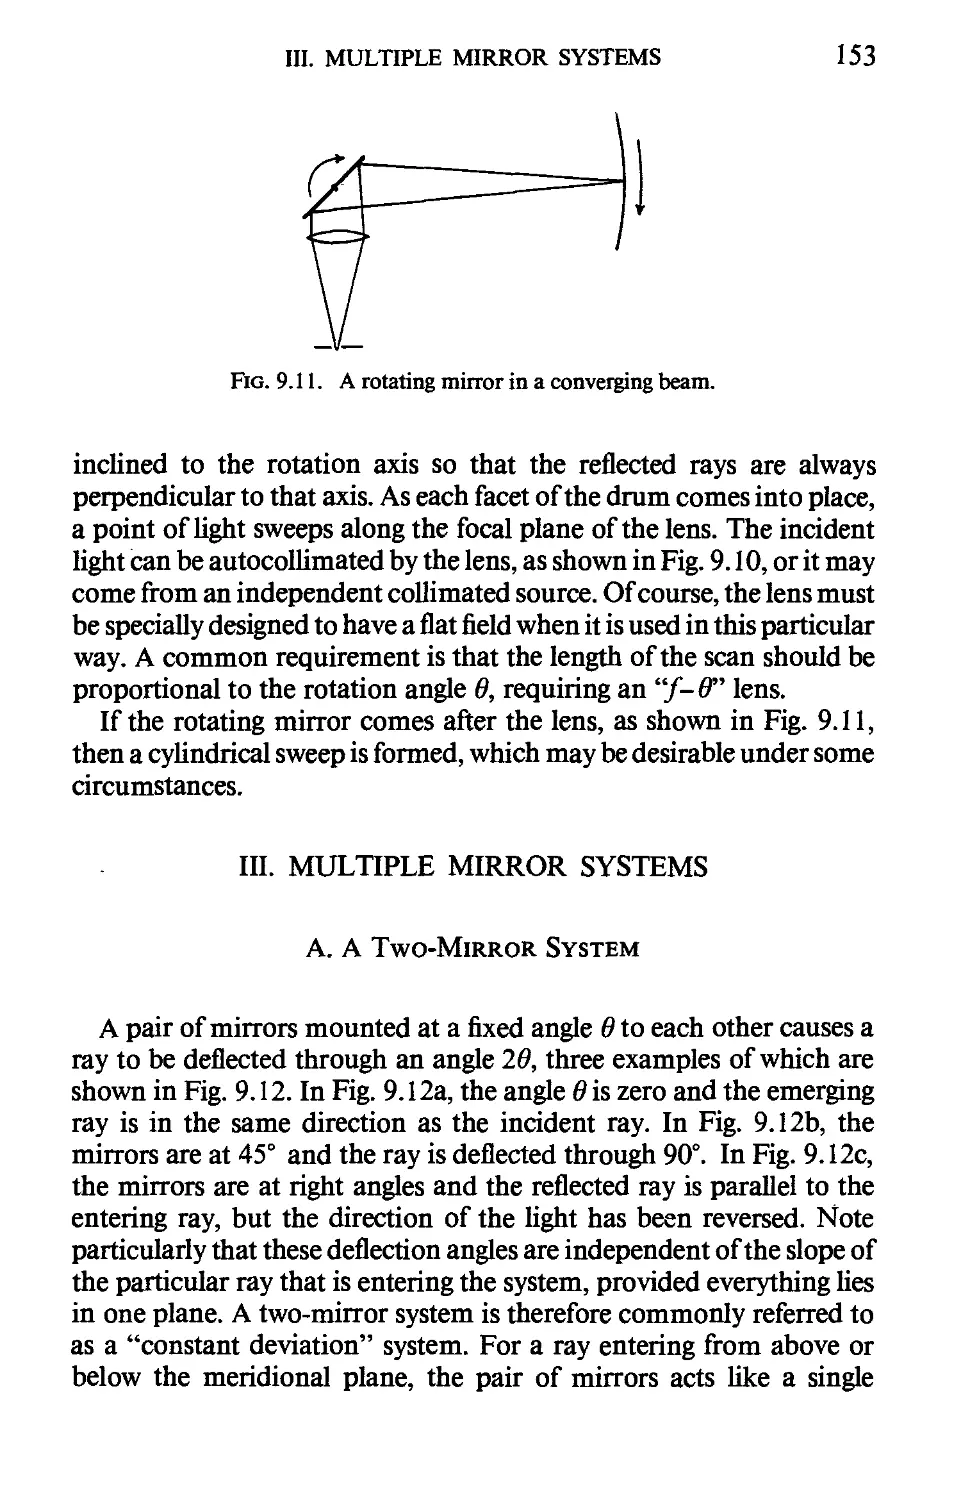 III. Multiple Mirror Systems